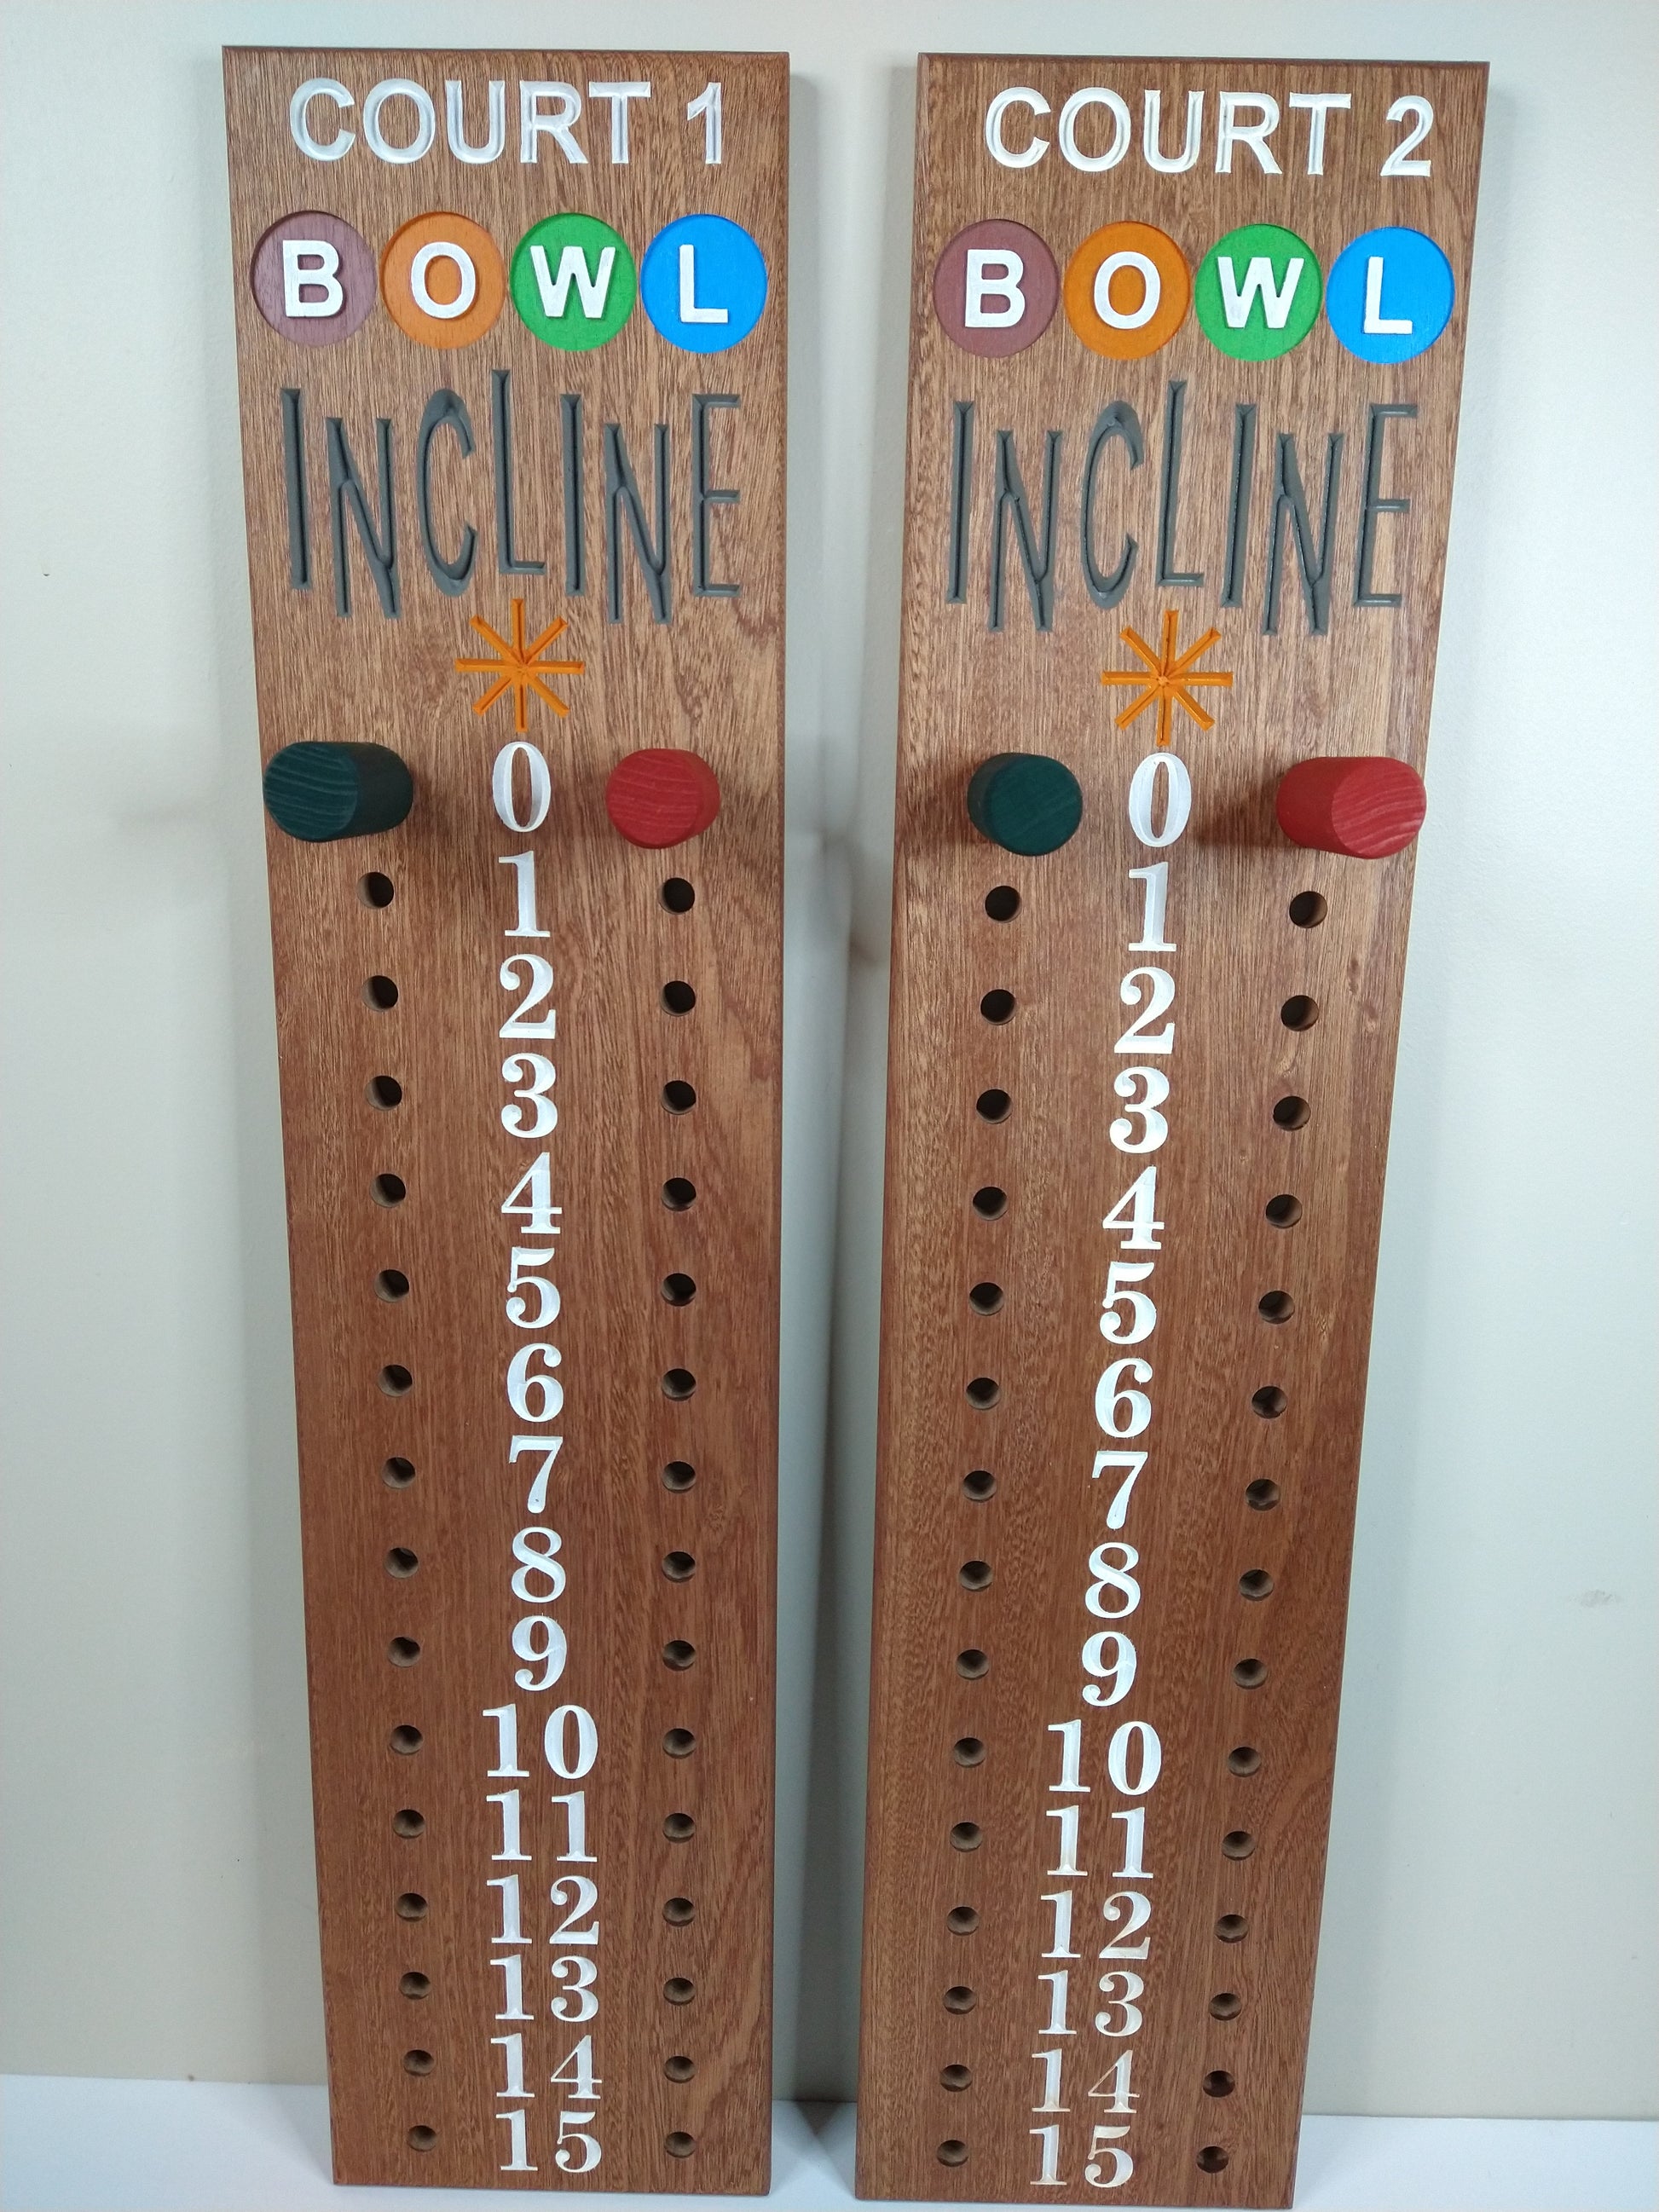 Incline Bowl Logo bocce scoreboard